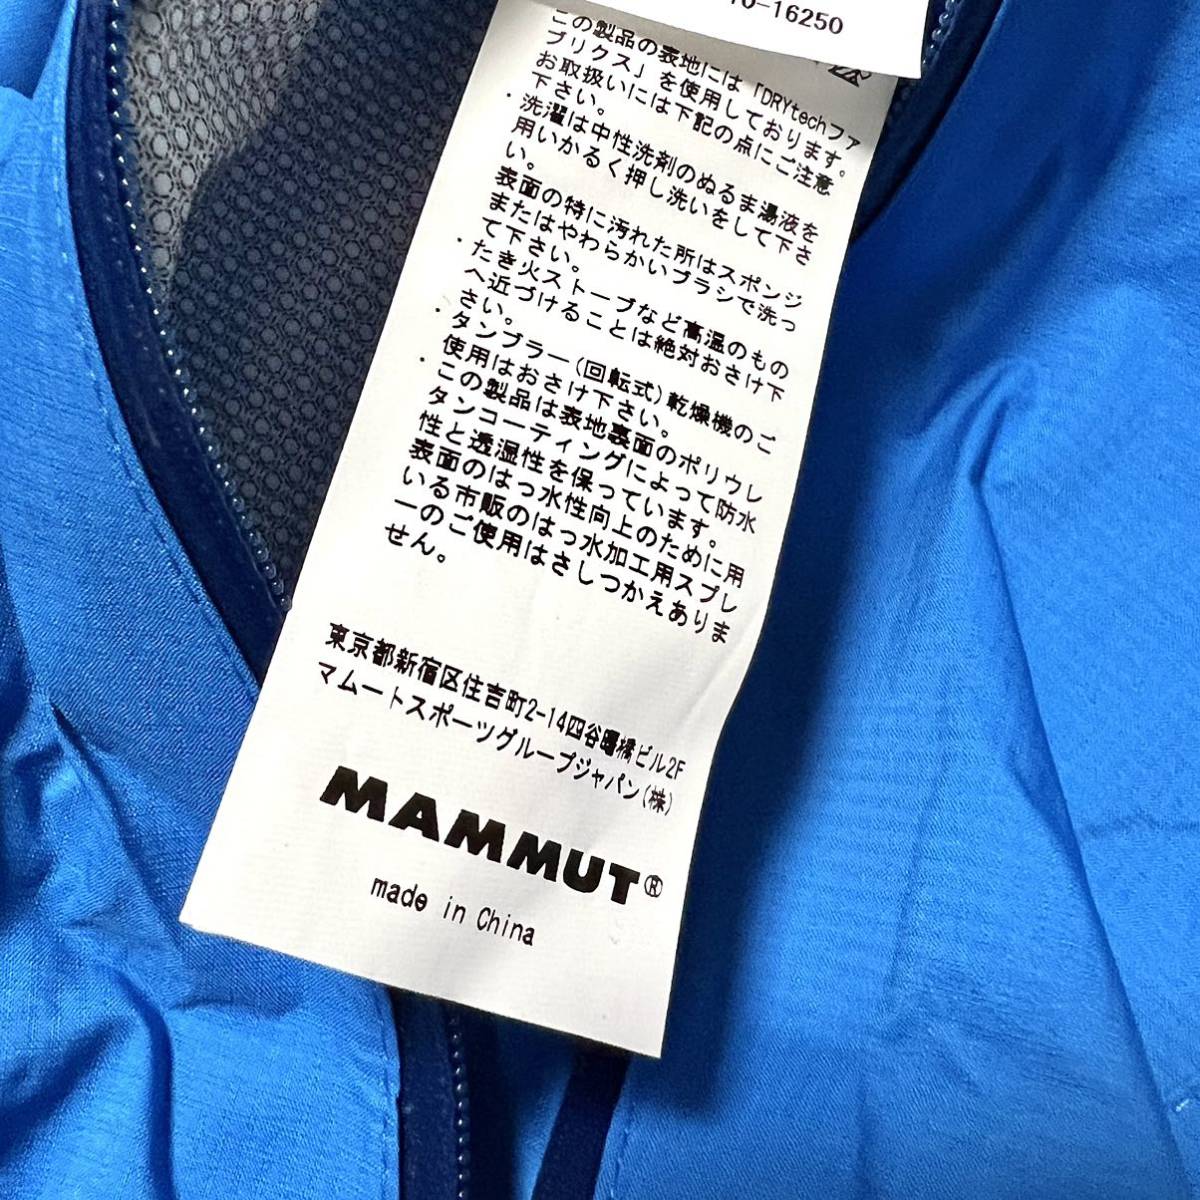 S 新品 マムート 刺繍ロゴ 防水 ドライテック コンパクト ジャケット MAMMUT ハイキング レイン 登山 トレッキング レインジャケット